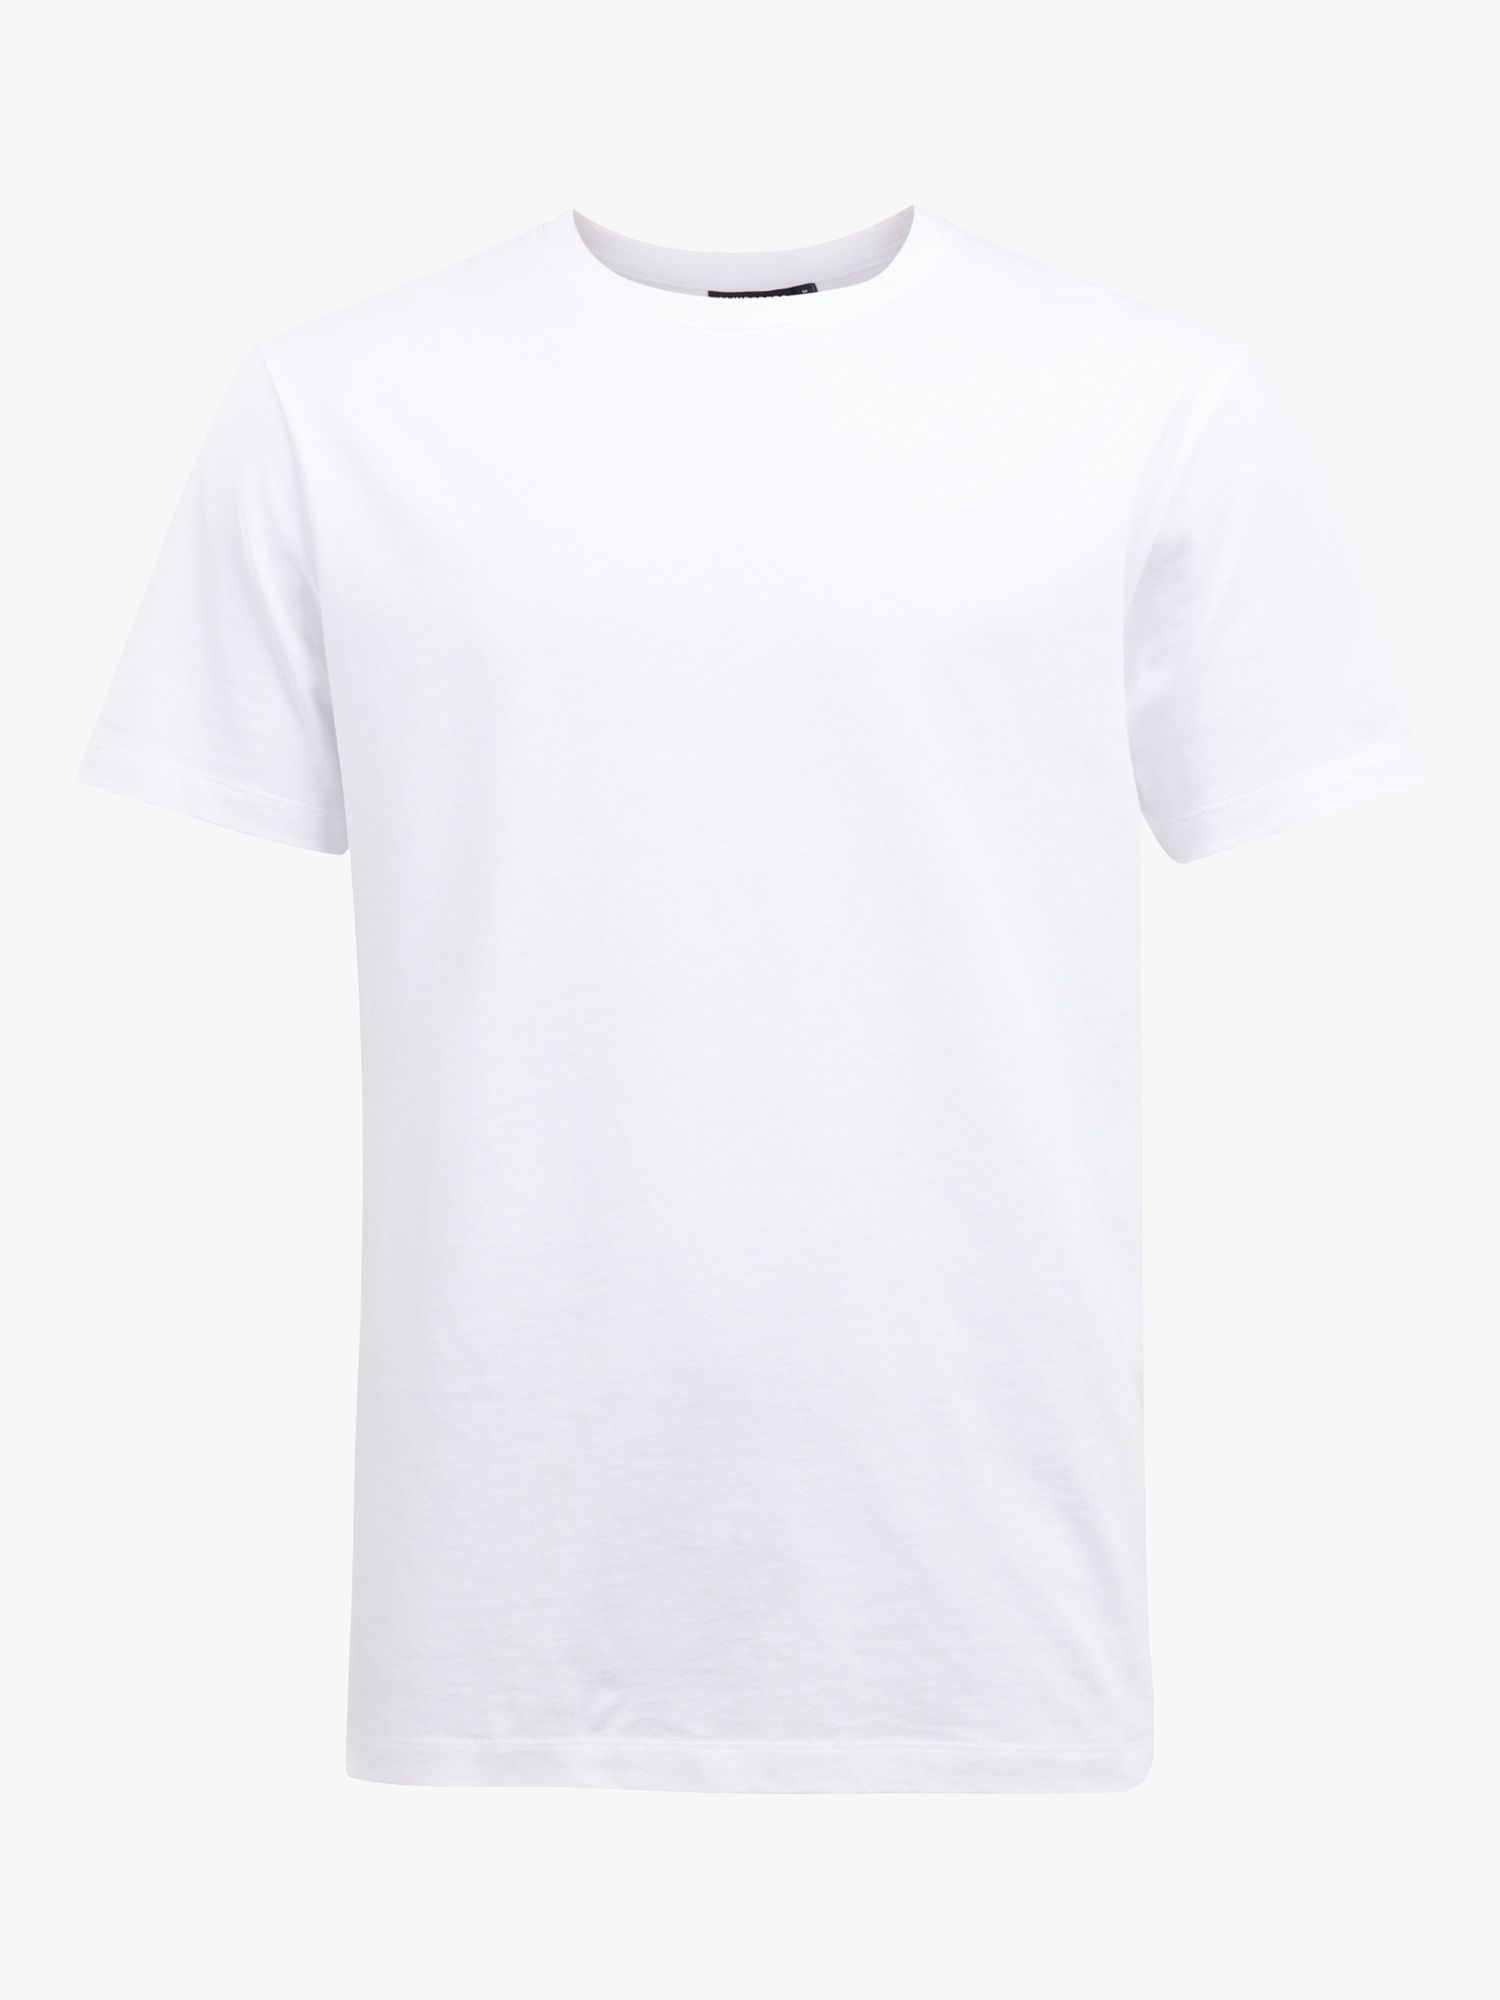 J.Lindeberg Sid Basic T-Shirt, White at John Lewis & Partners